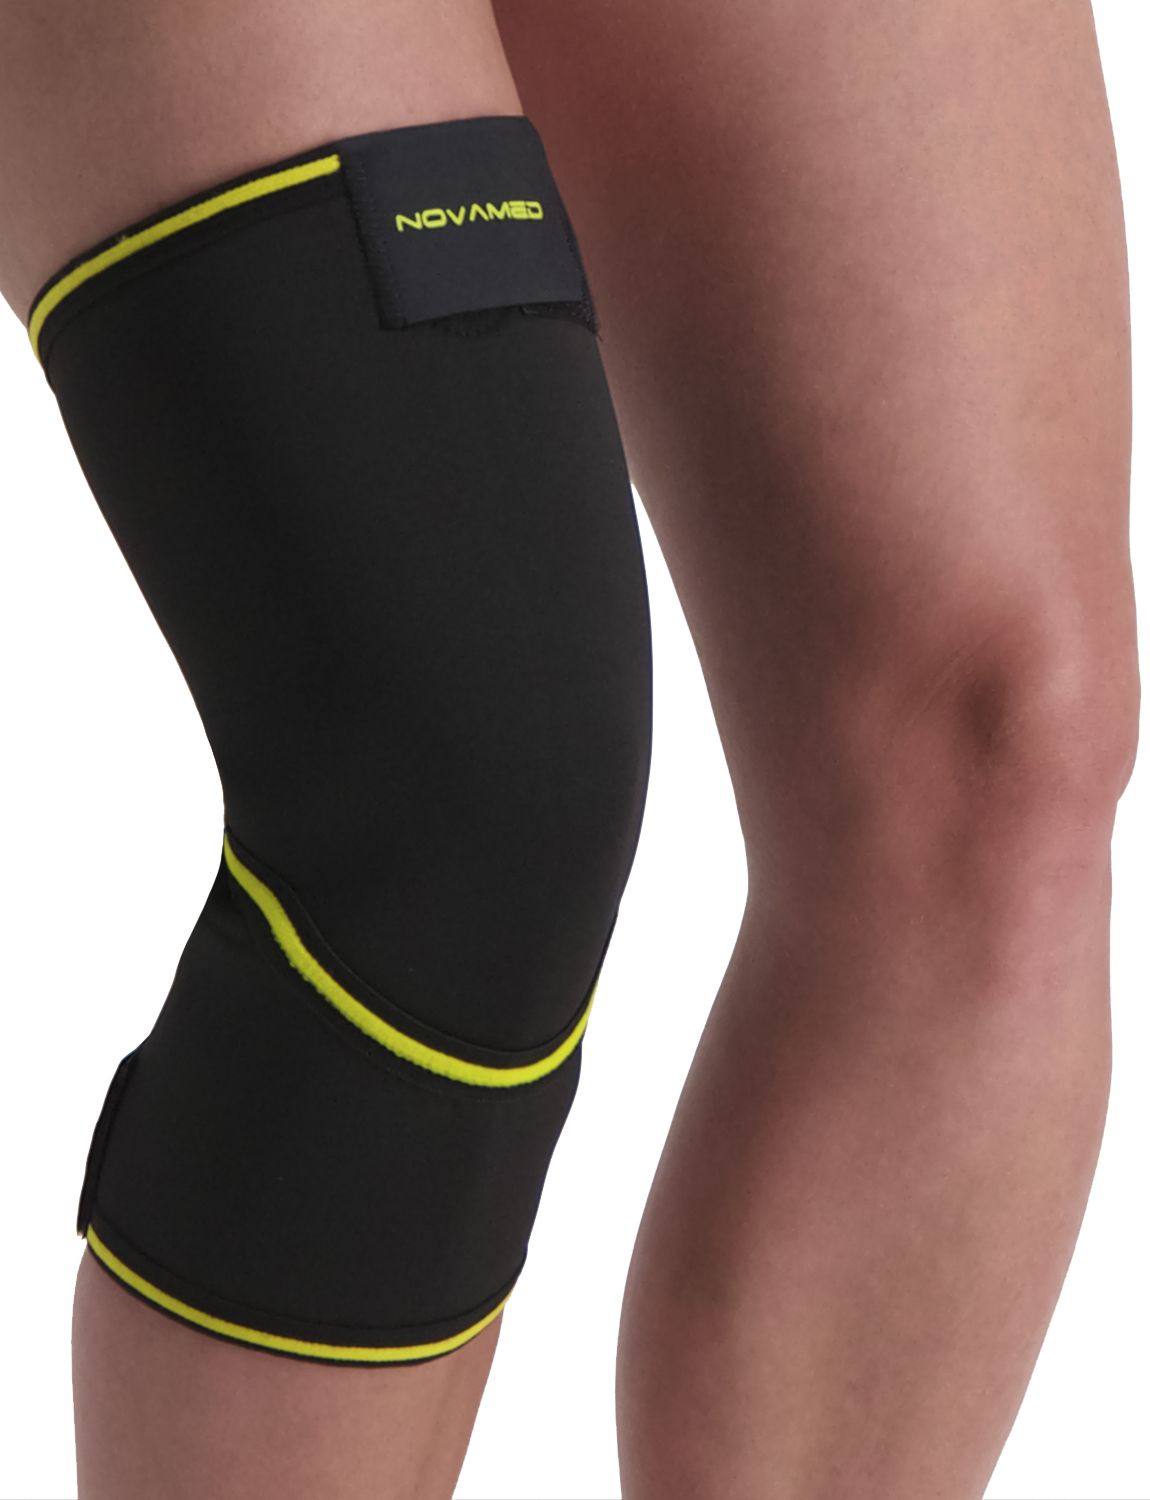 novamed closed patella knee support for sale